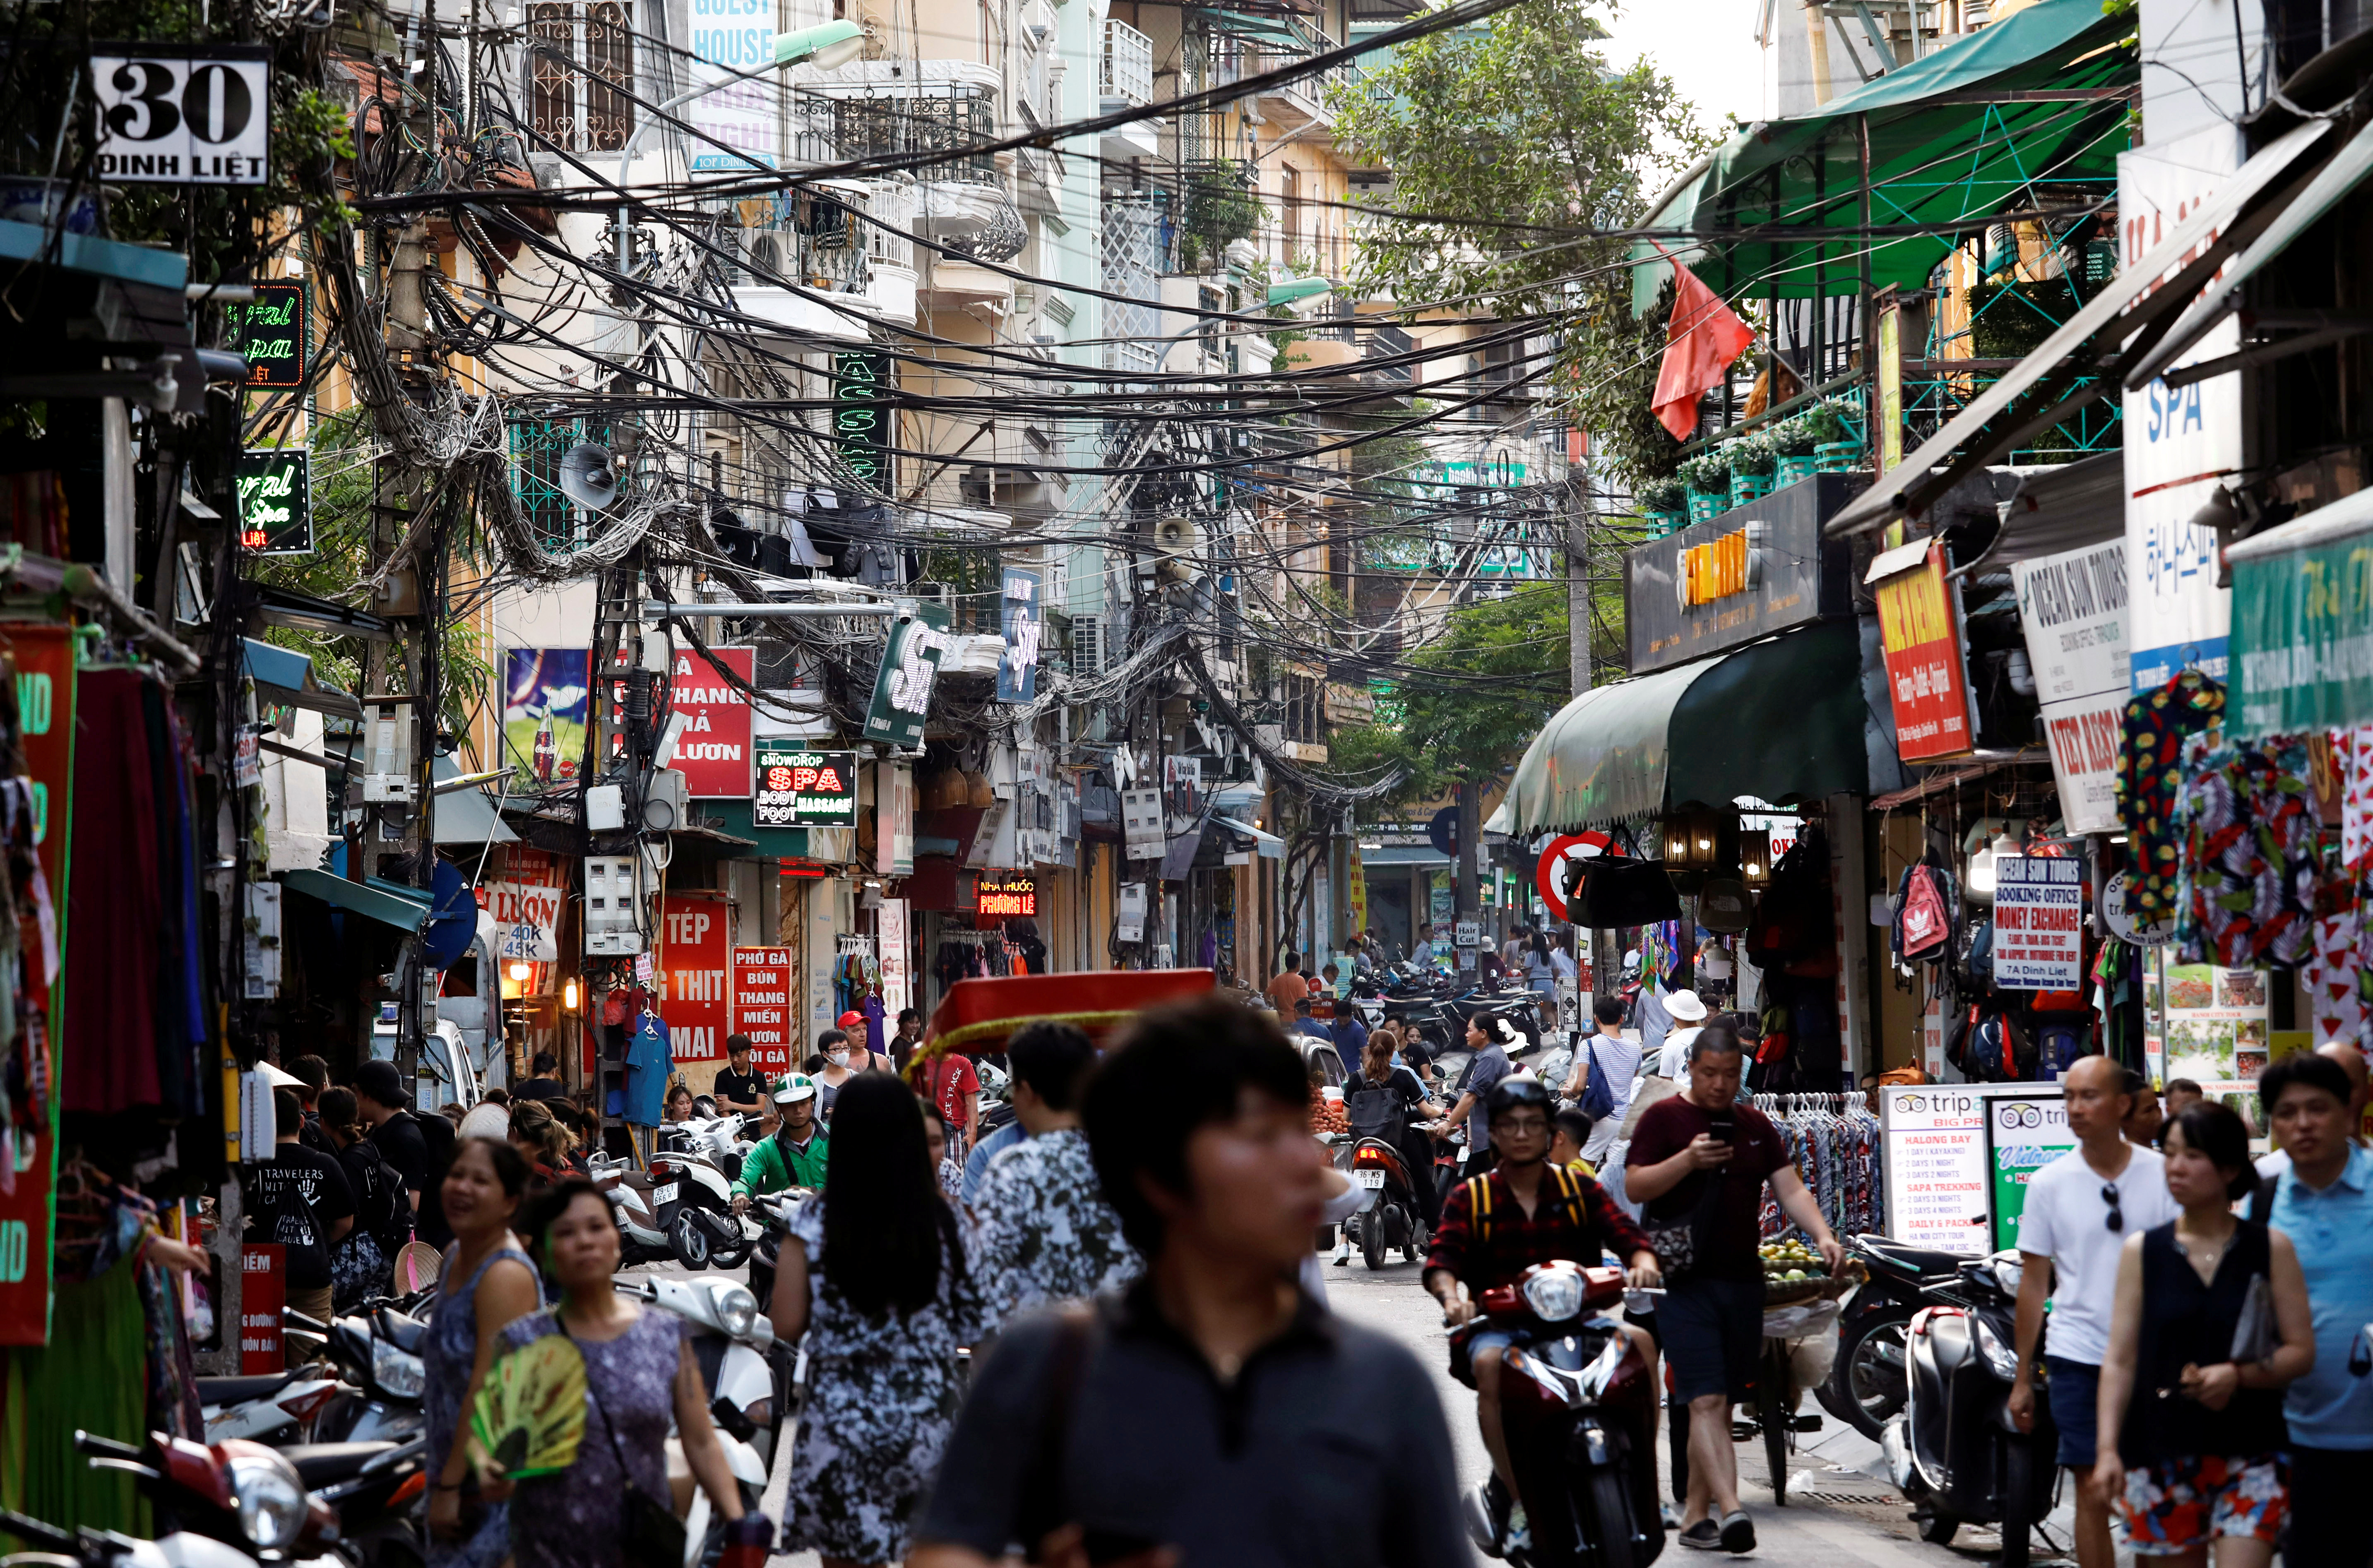 Vietnamese Street Porn - Foreign executives cautious over Vietnam investment -EU business body |  Reuters